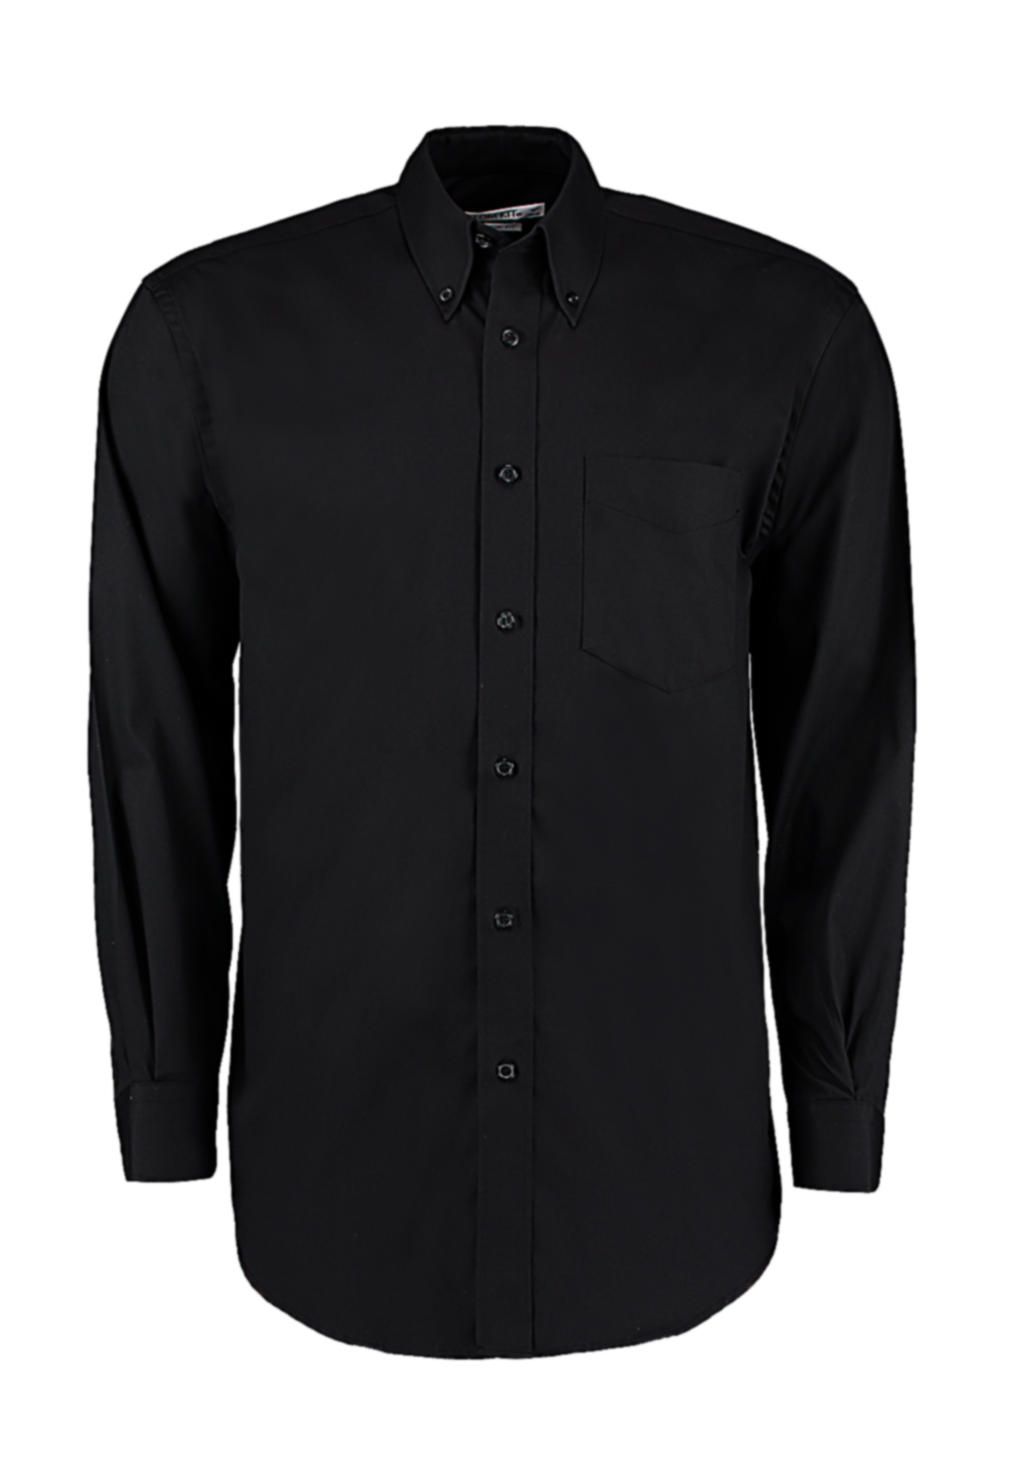 778.11 / Classic Fit Premium Oxford Shirt / Black